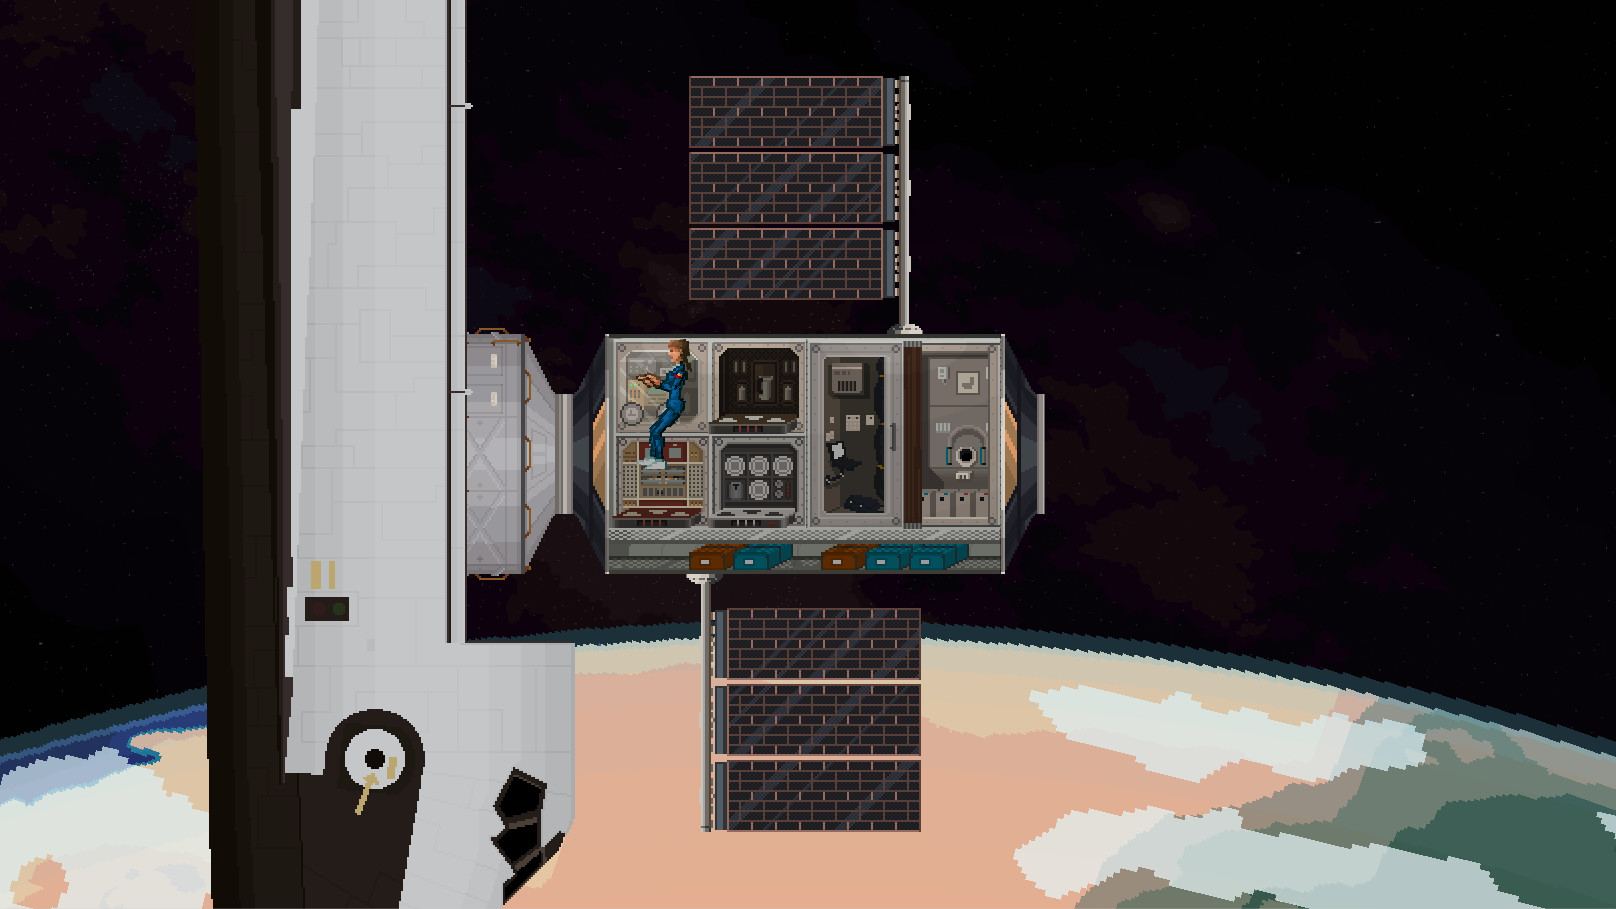 Space Station Continuum Mac OS